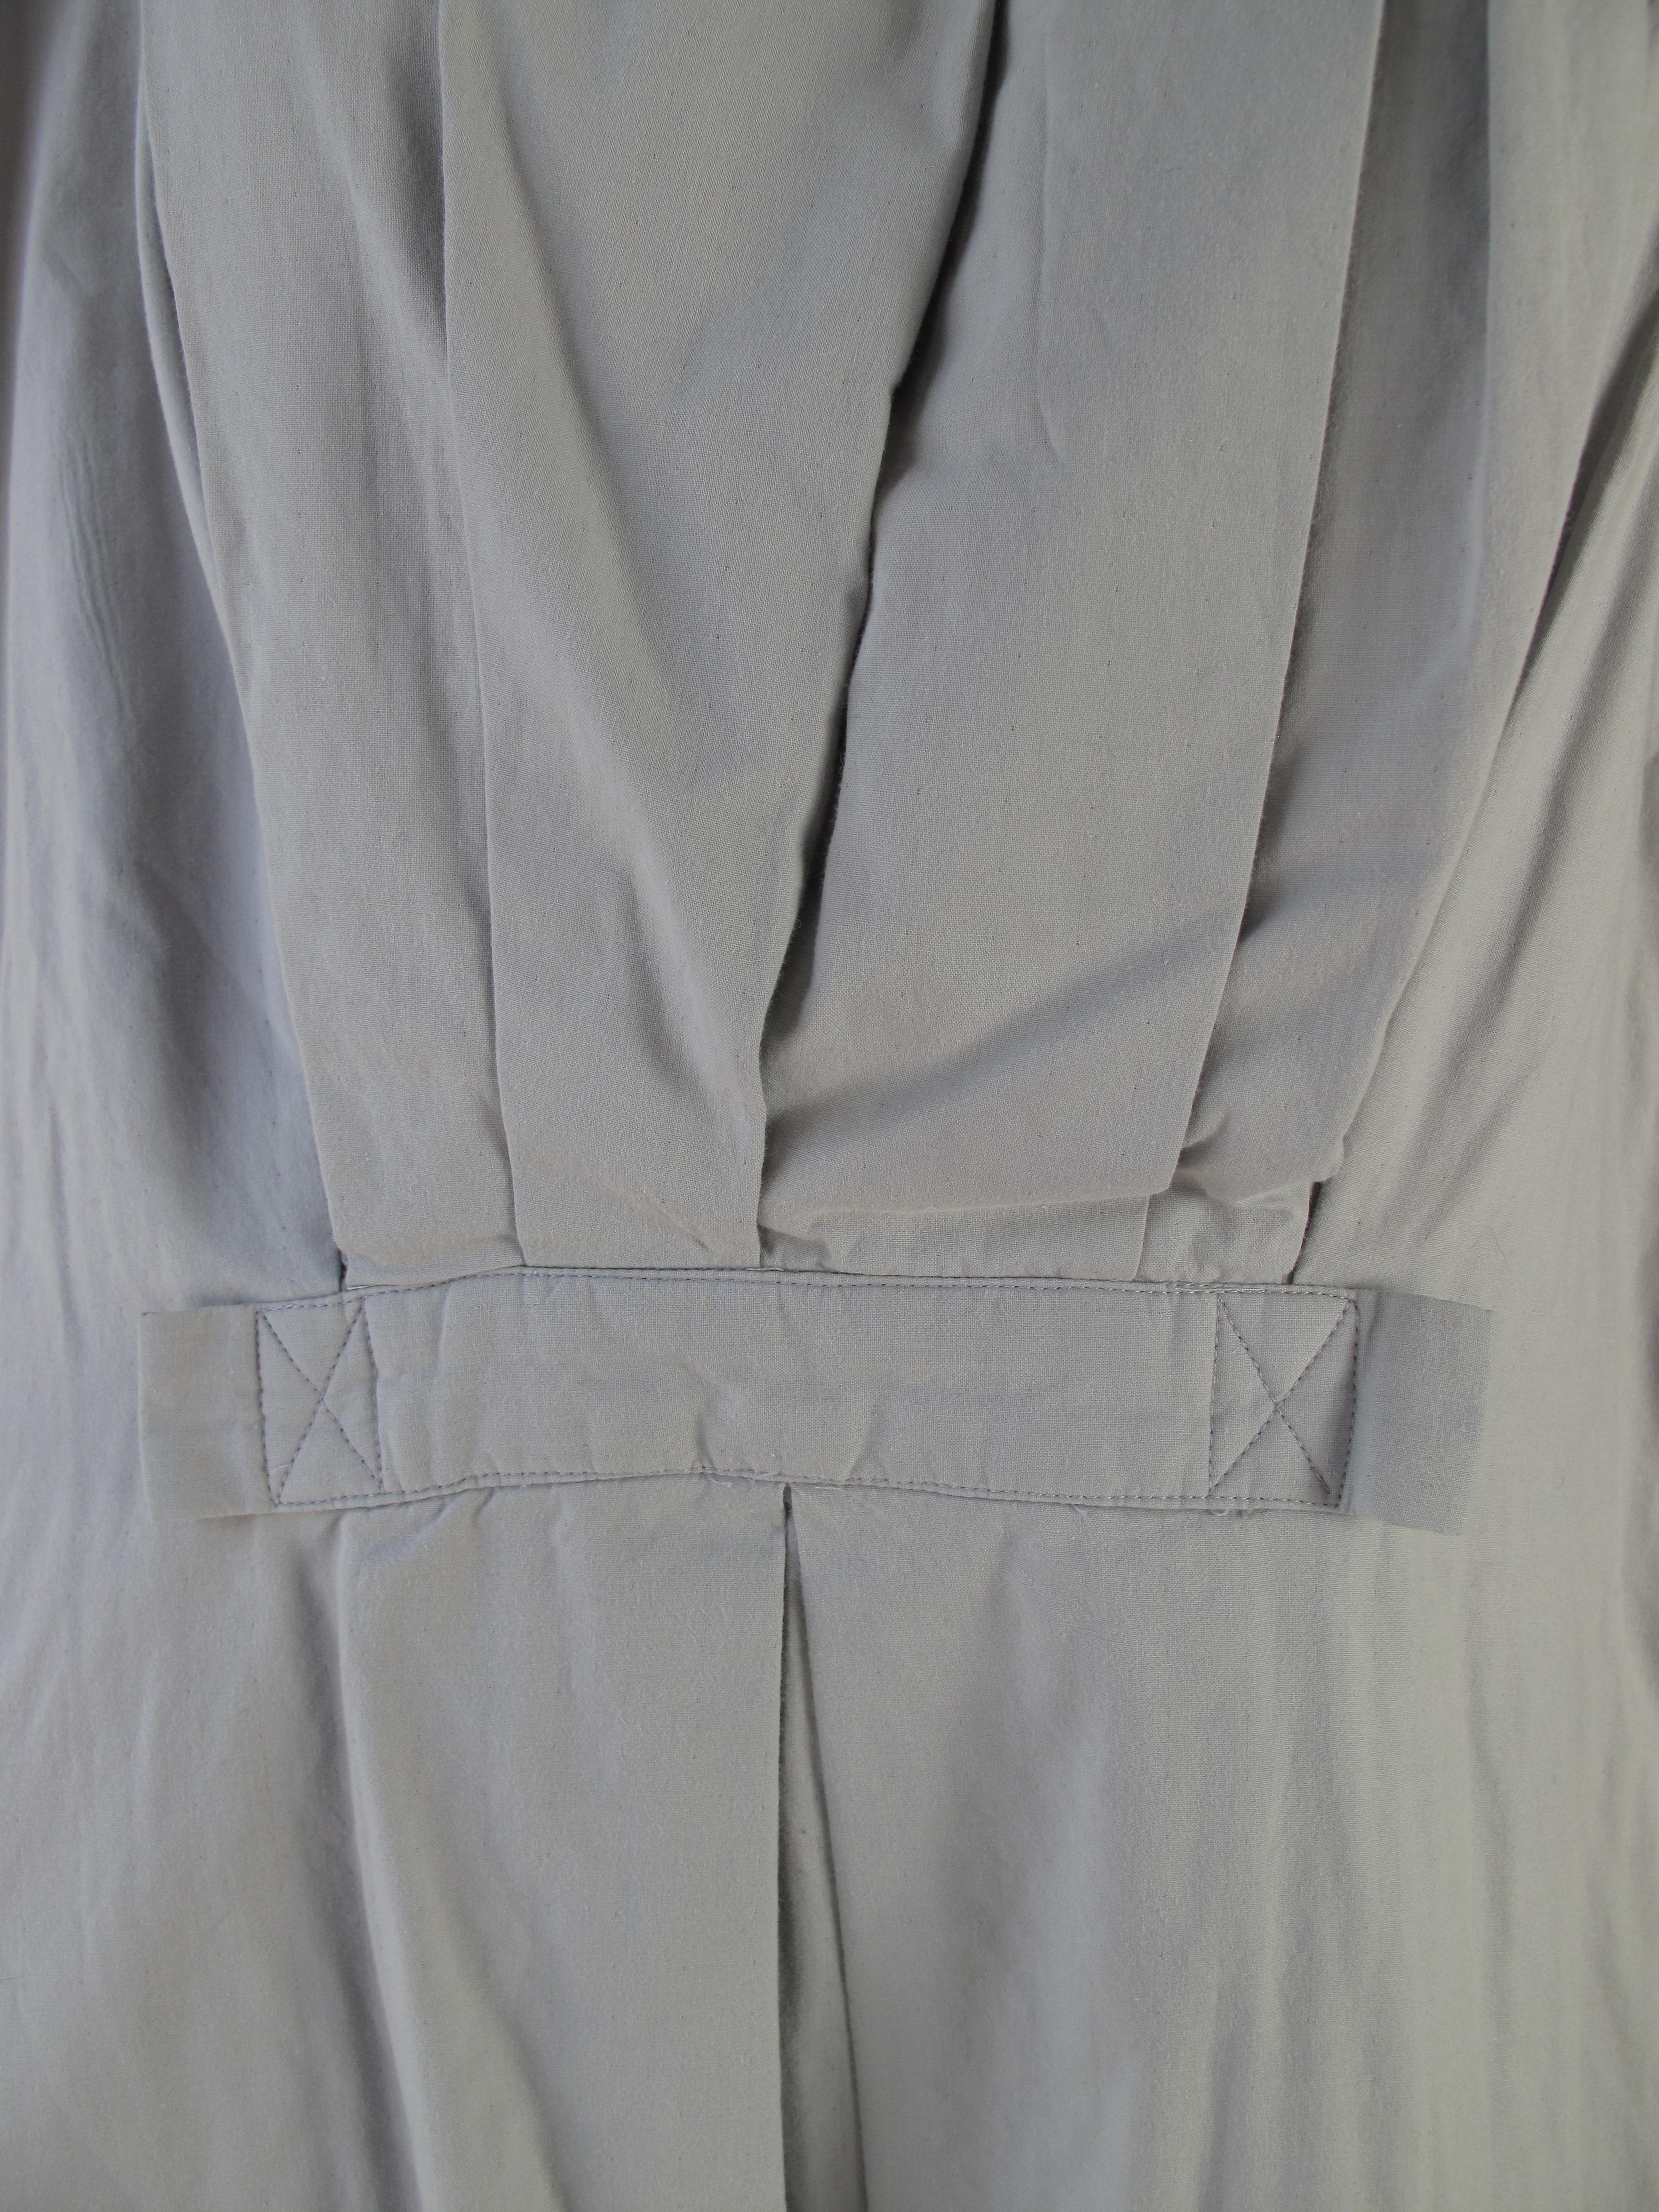 Issey Miyake Grey Cotton Dress, 1990s In Good Condition In Austin, TX